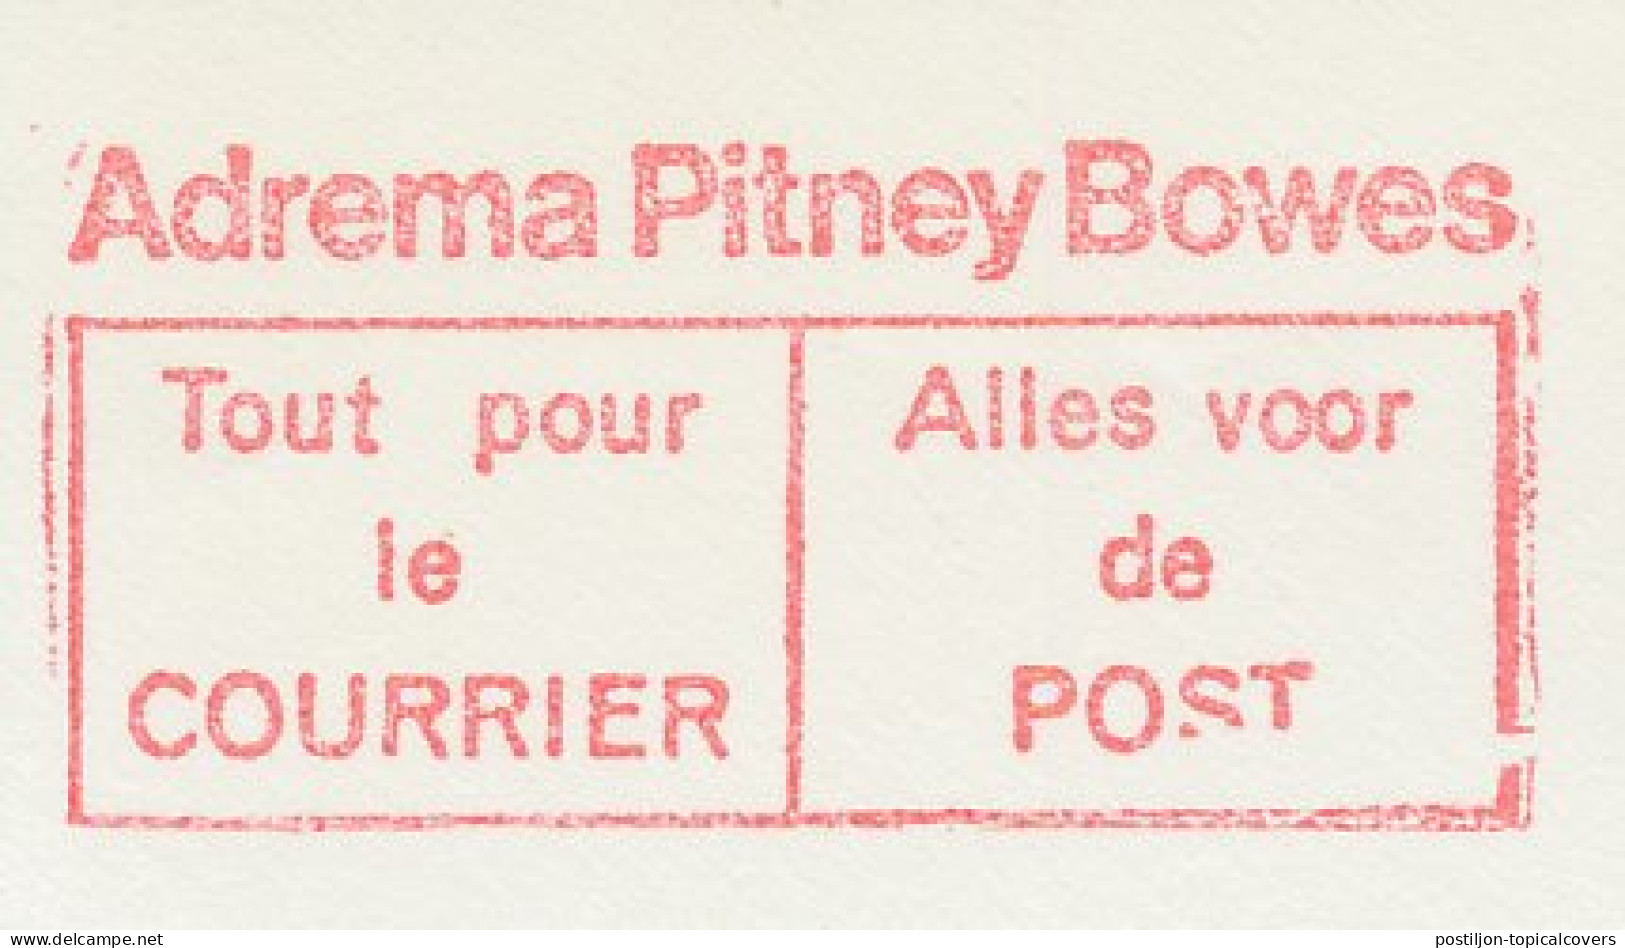 Meter Cut Belgium 1975 Pitney Bowes - Automatenmarken [ATM]